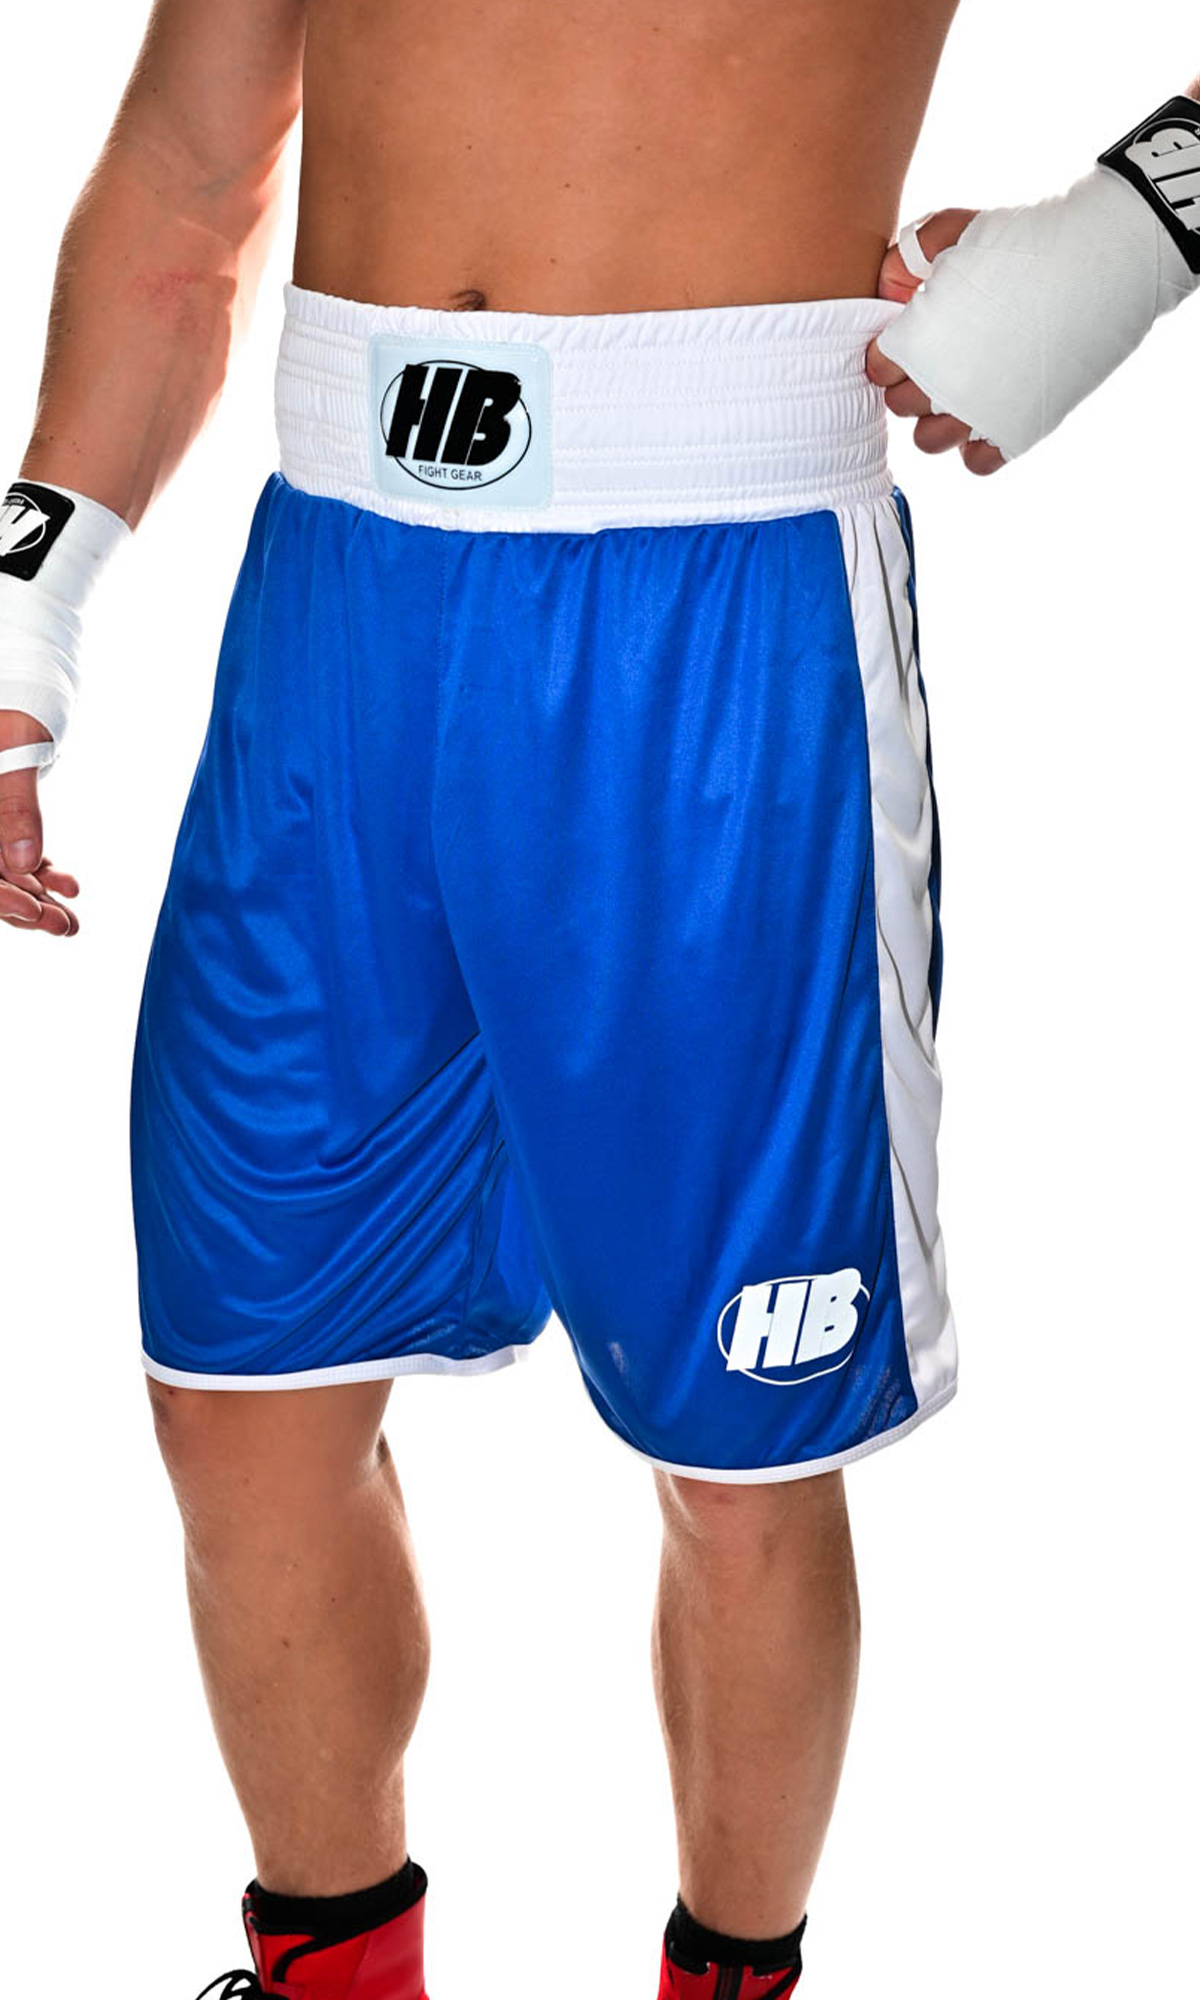 blue-boxing-shorts-hb